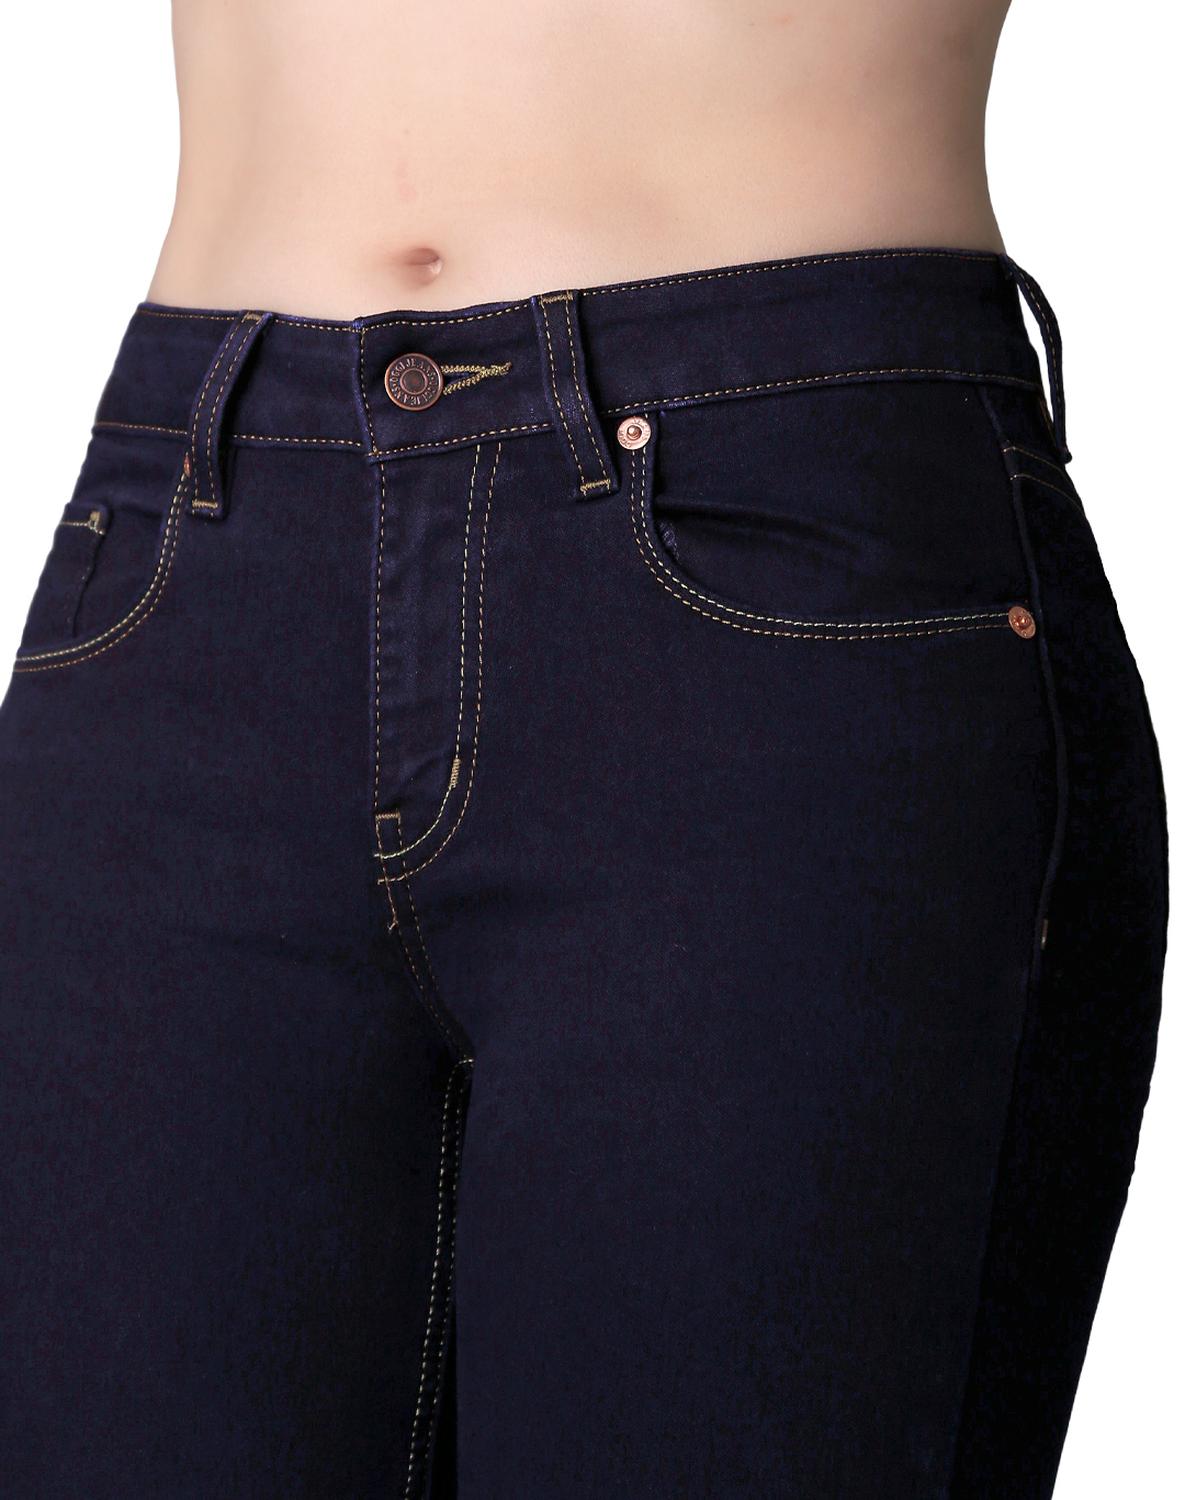 Jeans Básico Mujer Oggi Satin 59101927 Mezclilla Stretch